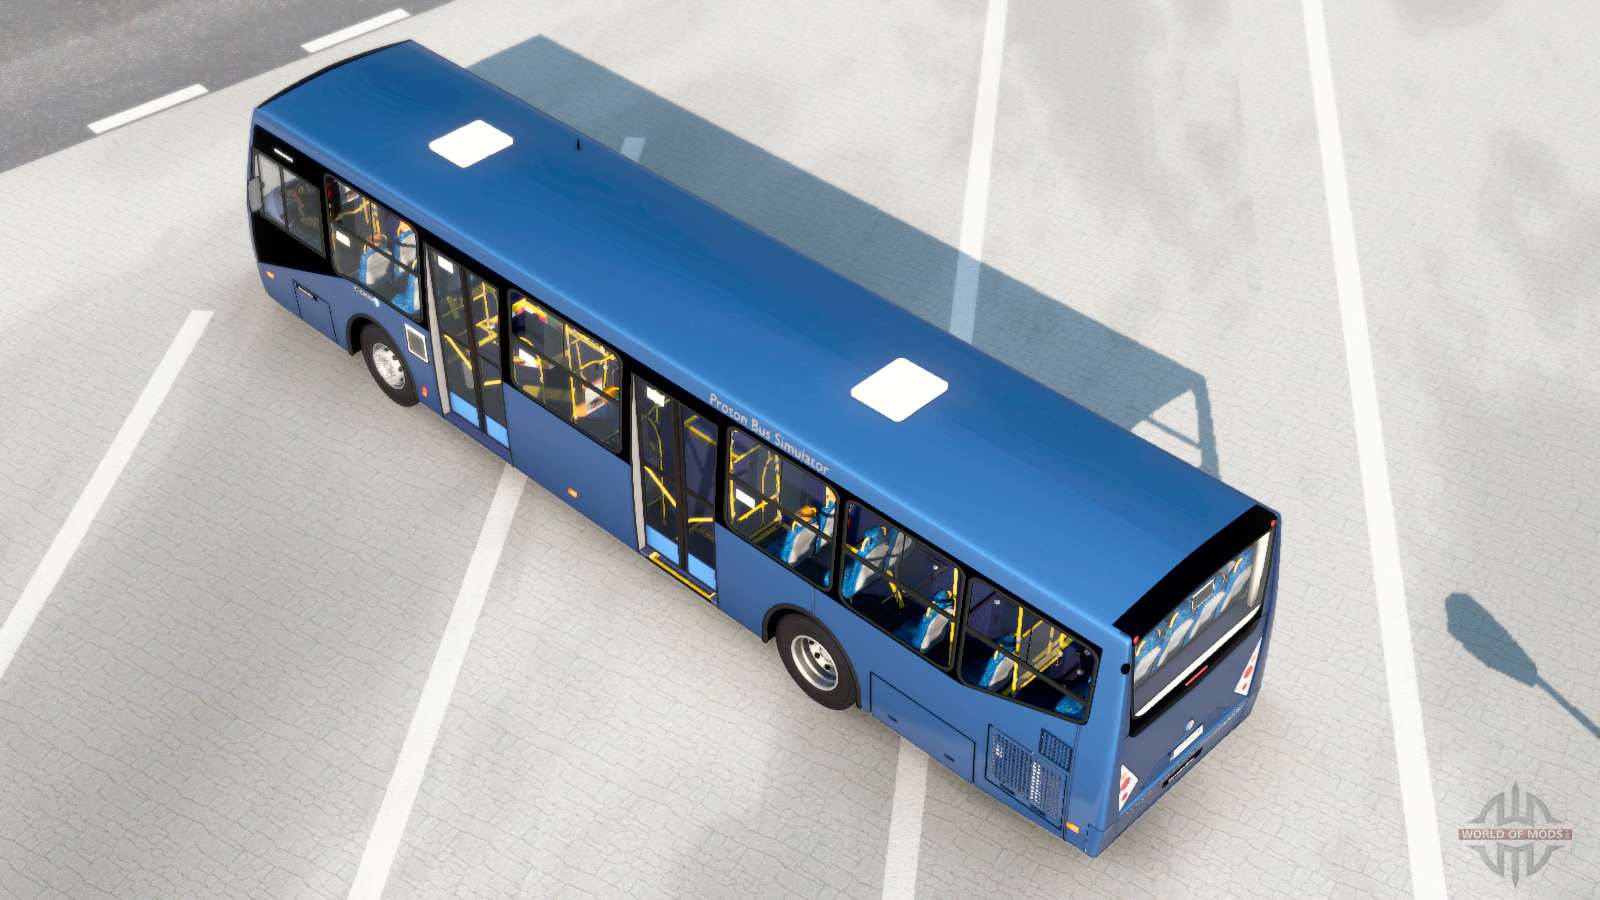 Manual Volkswagen Minibus Drive - Proton Bus Simulator 2023